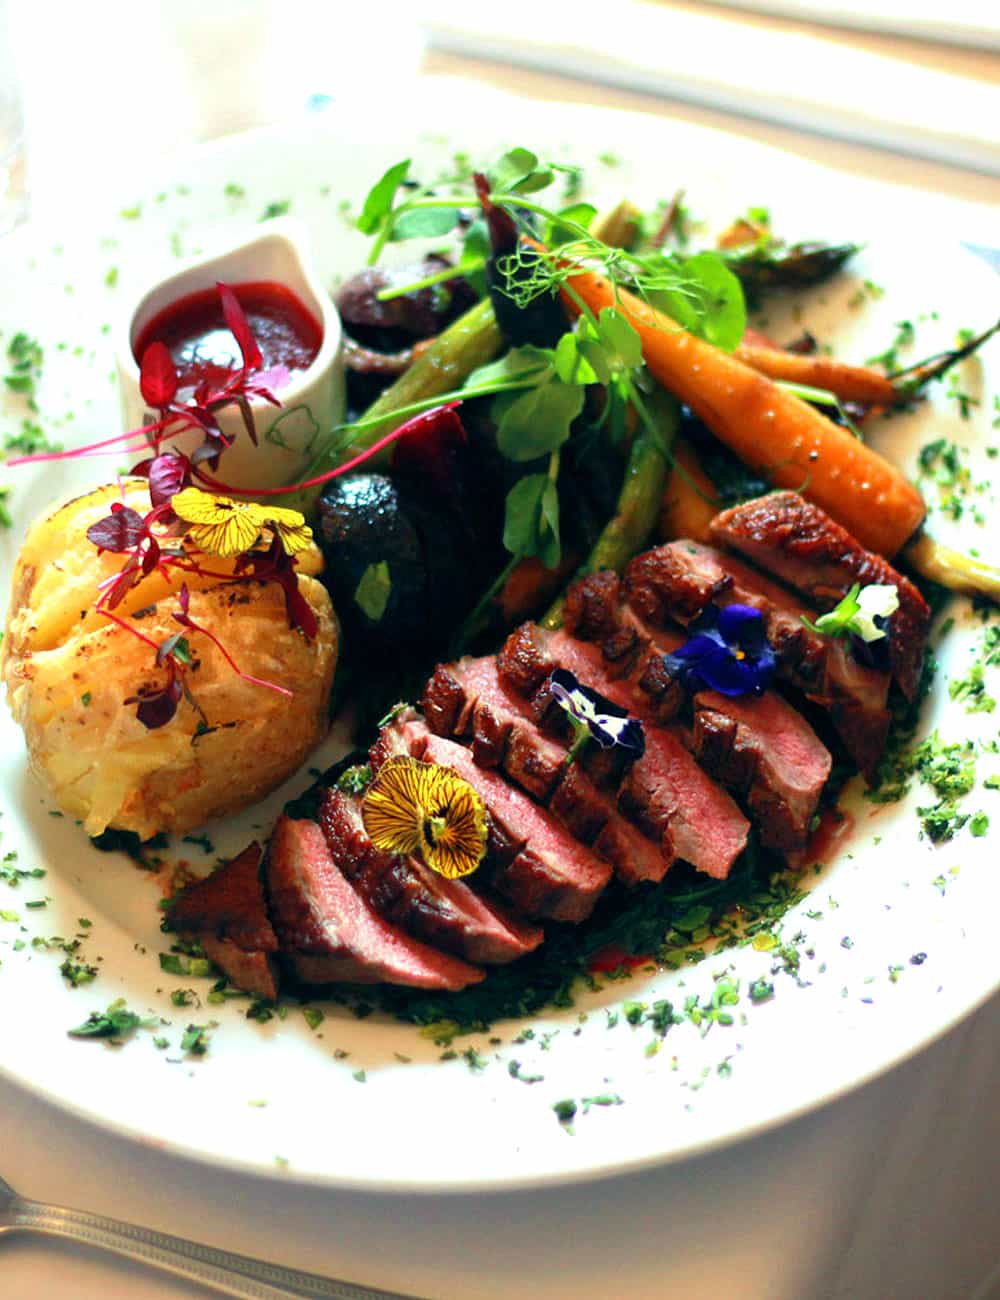 Plate of food, steak and vegetables